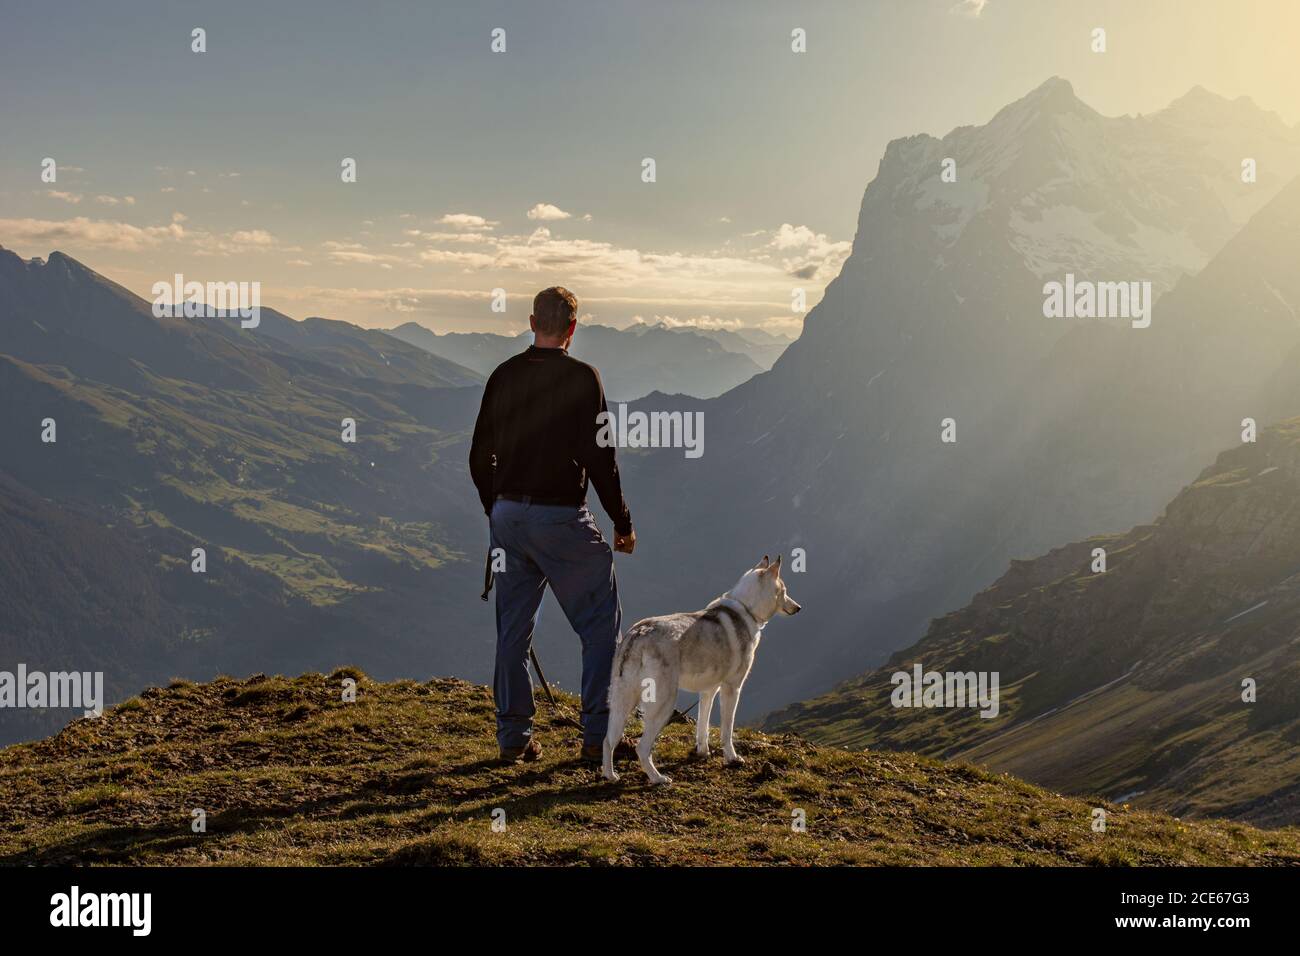 Un homme qui apprécie avec son chien husky la vue magnifique sur la vallée. // Ein Mann geniesst mit seinem Husky die schöne Aussicht in das Tal. Banque D'Images